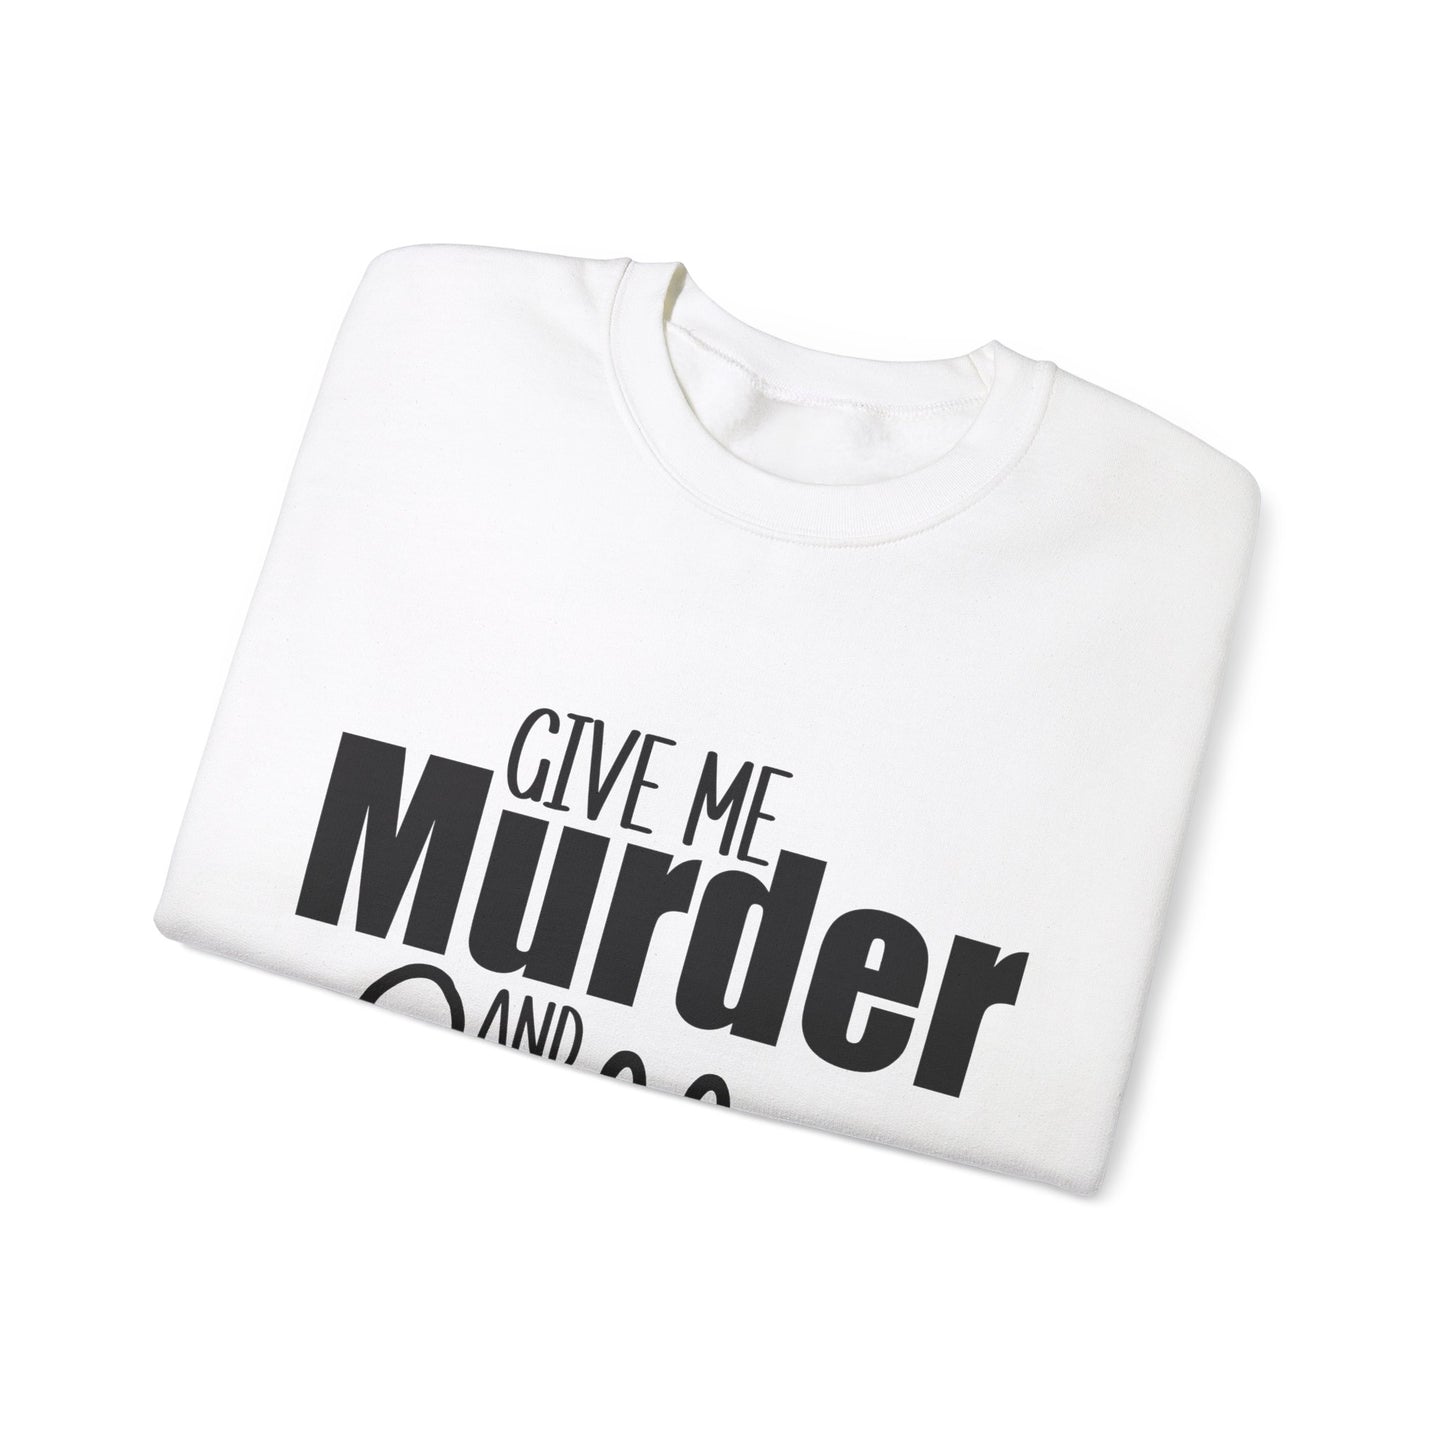 Give Me Murder And Coffee Crewneck Sweatshirt